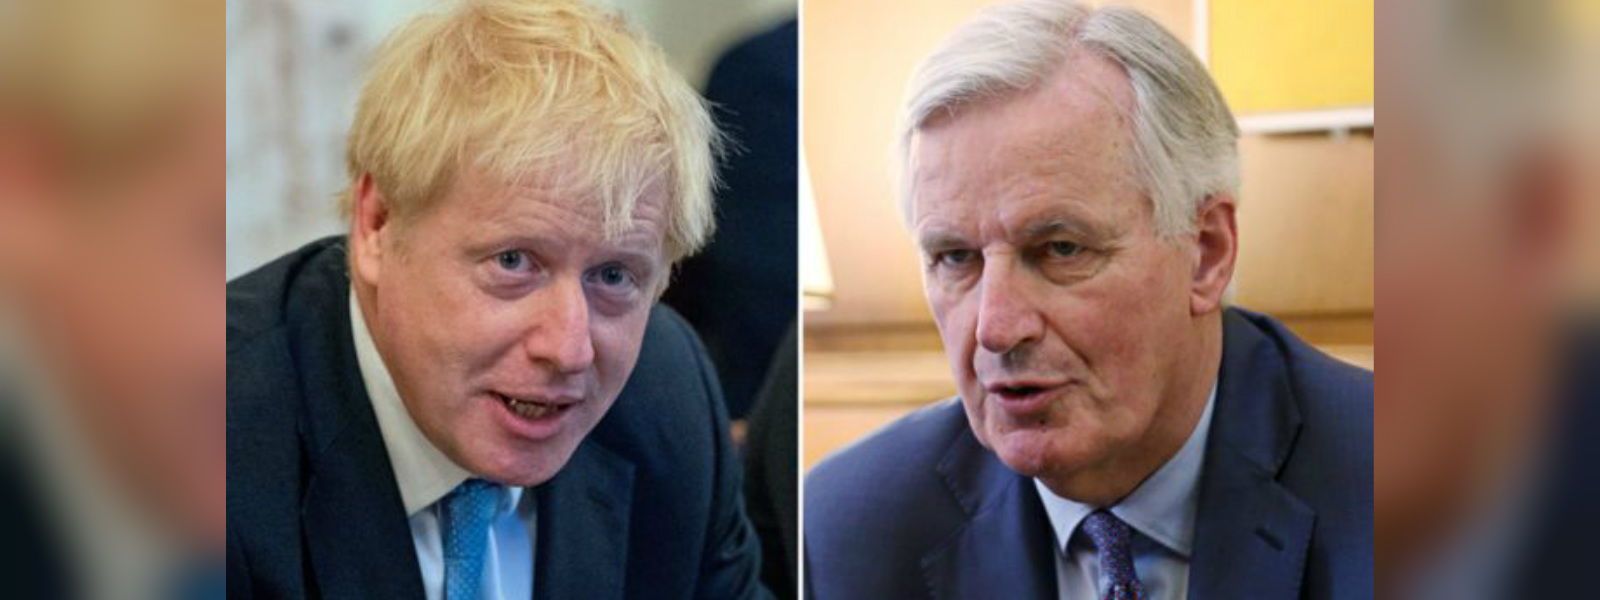 Boris Johnson's Brexit policy 'unacceptable' - EU 